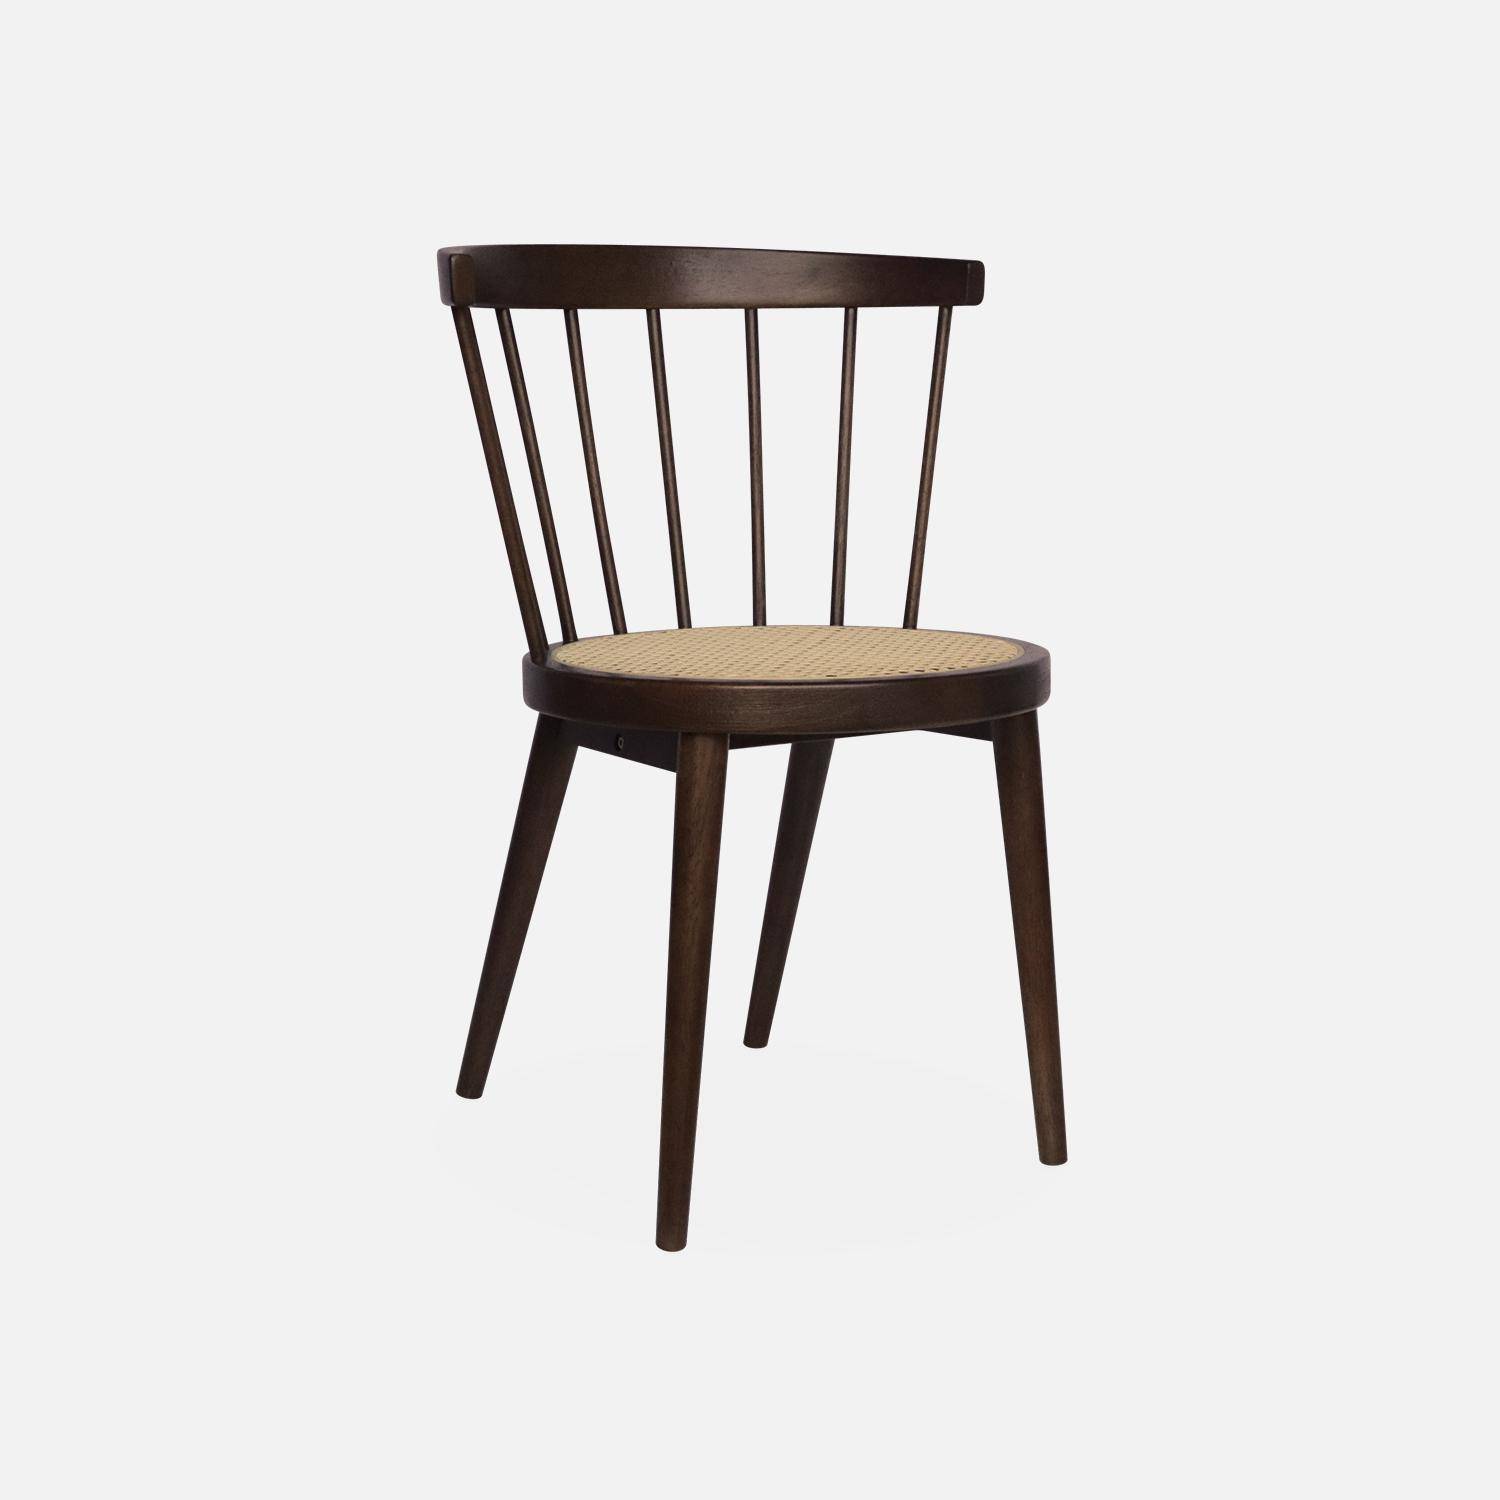 Pair of  Wood and Cane Chairs, Bohemian Spirit, Dark wood, L53 x W53.5 x H 6 cm Photo5